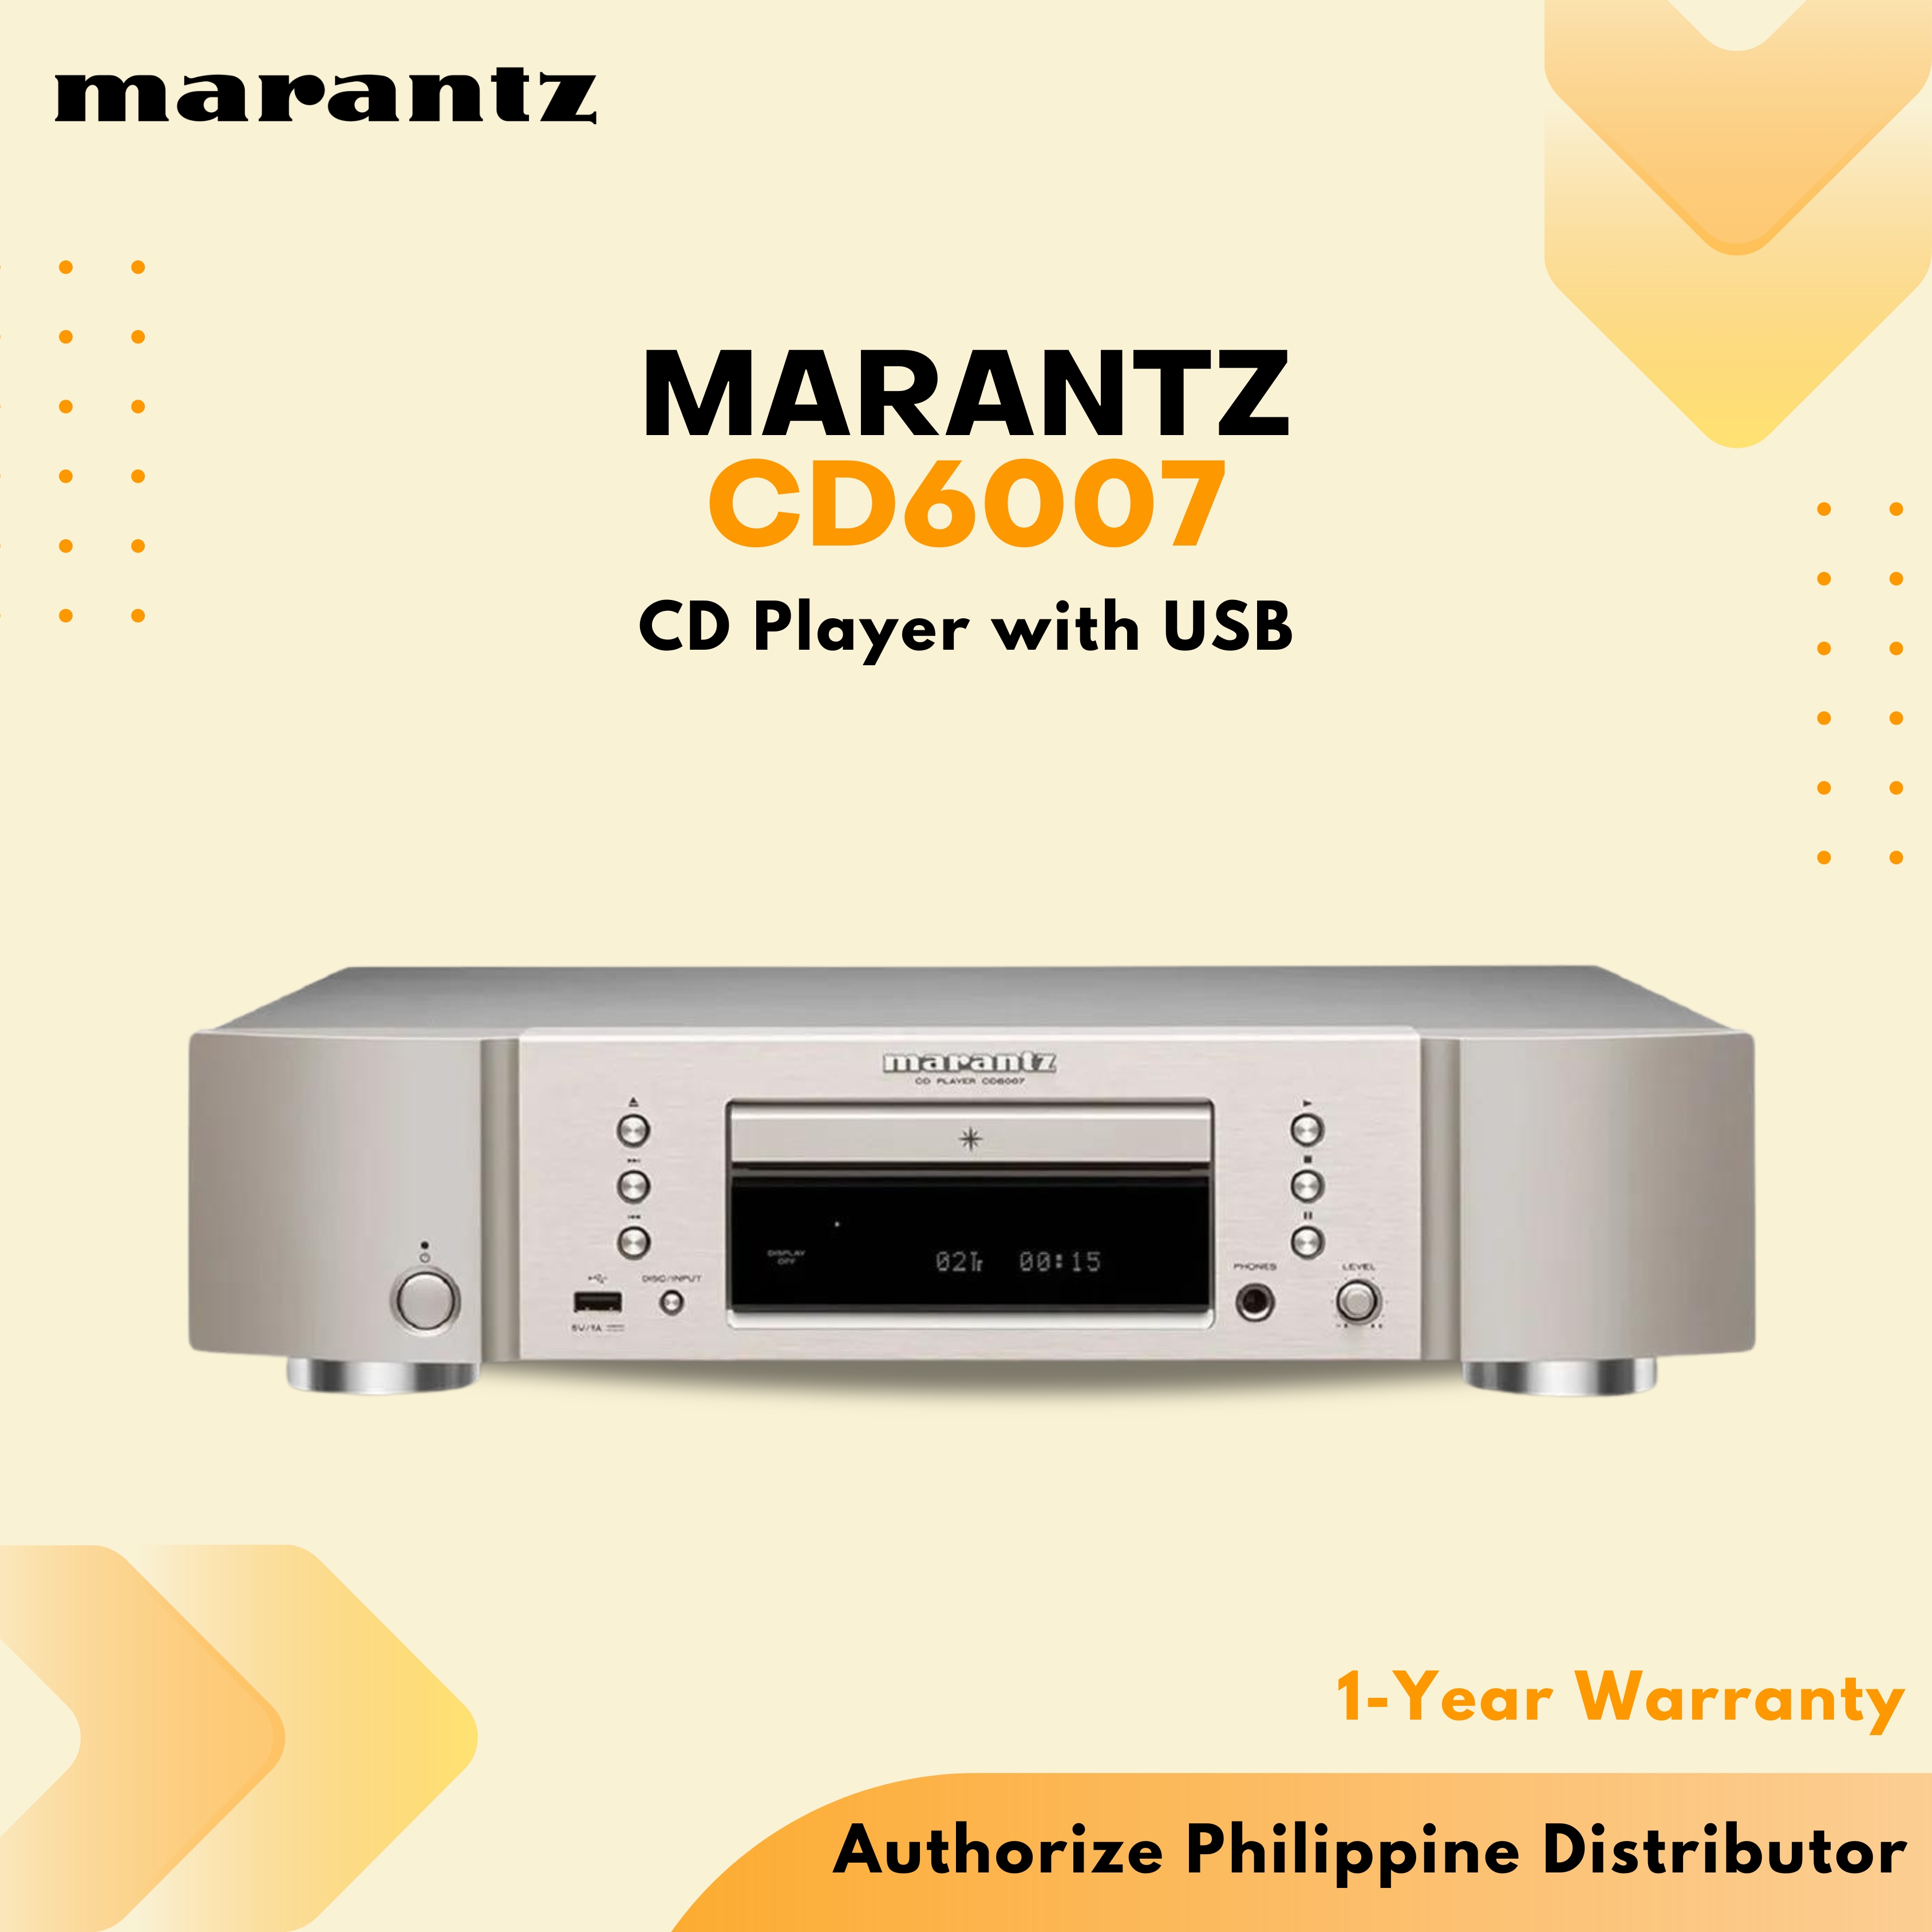 Marantz CD6007 Single-disc CD player with USB port for thumb